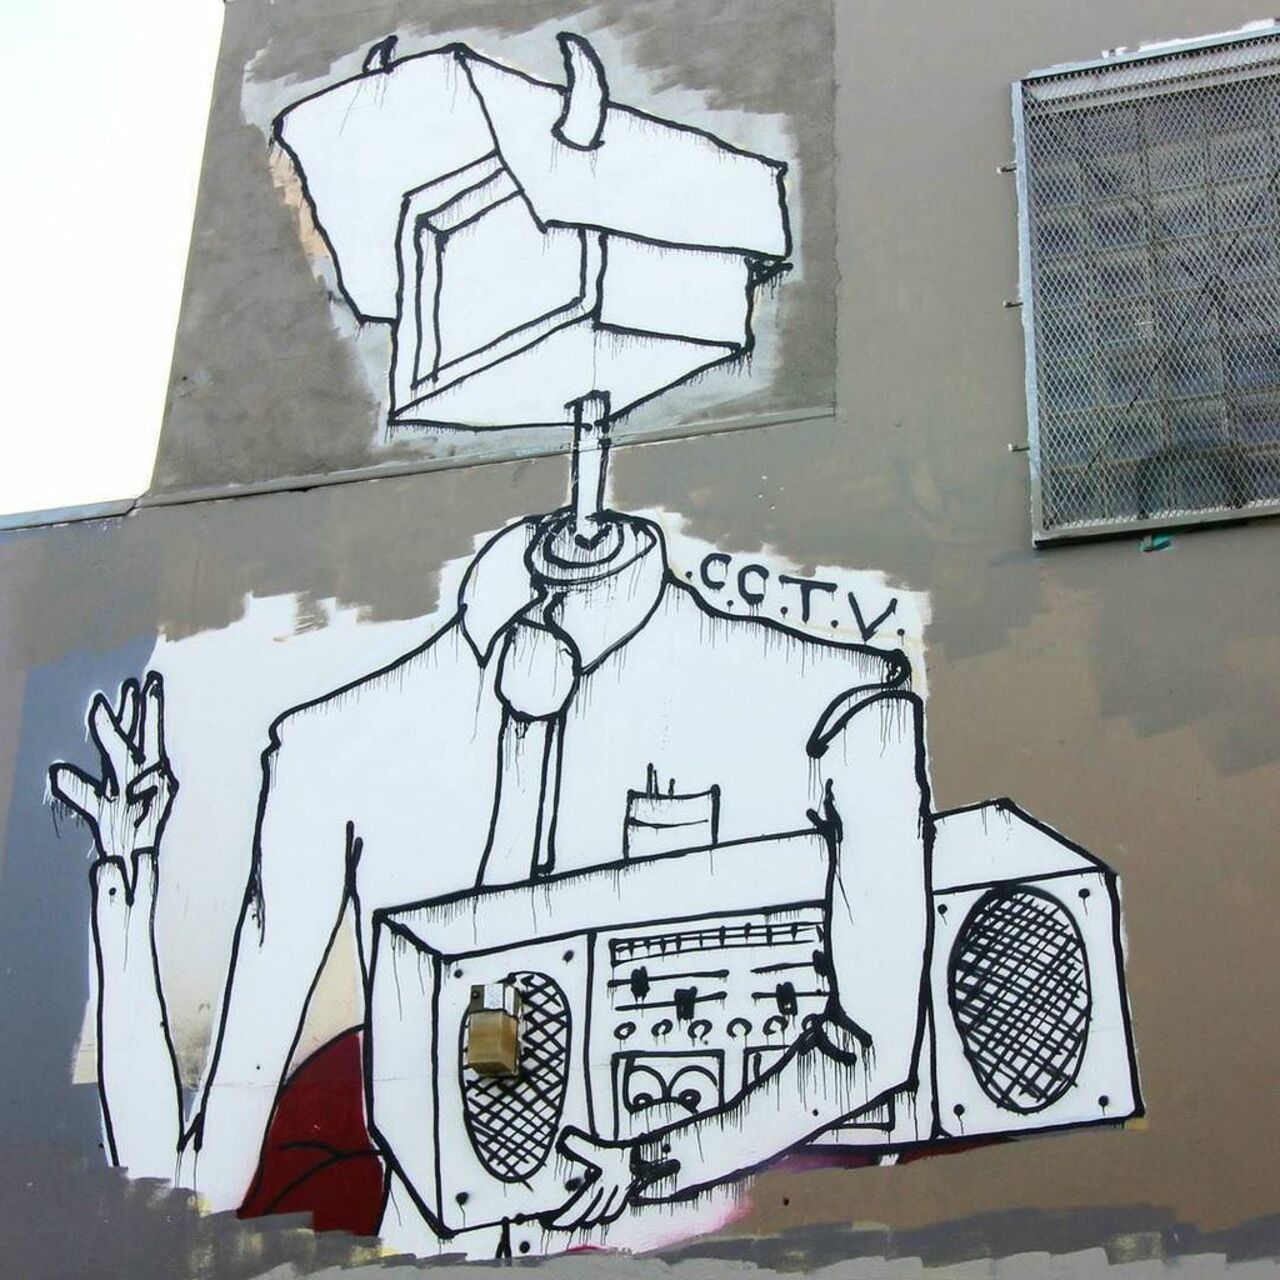 #CCTV #StreetArt #UrbanArt #Mural #GRAFFITI #SprayCanArt #Street_Art #StreetPaintings #Art #Graff #StreetPhotograph… https://t.co/UvD2yopMwz